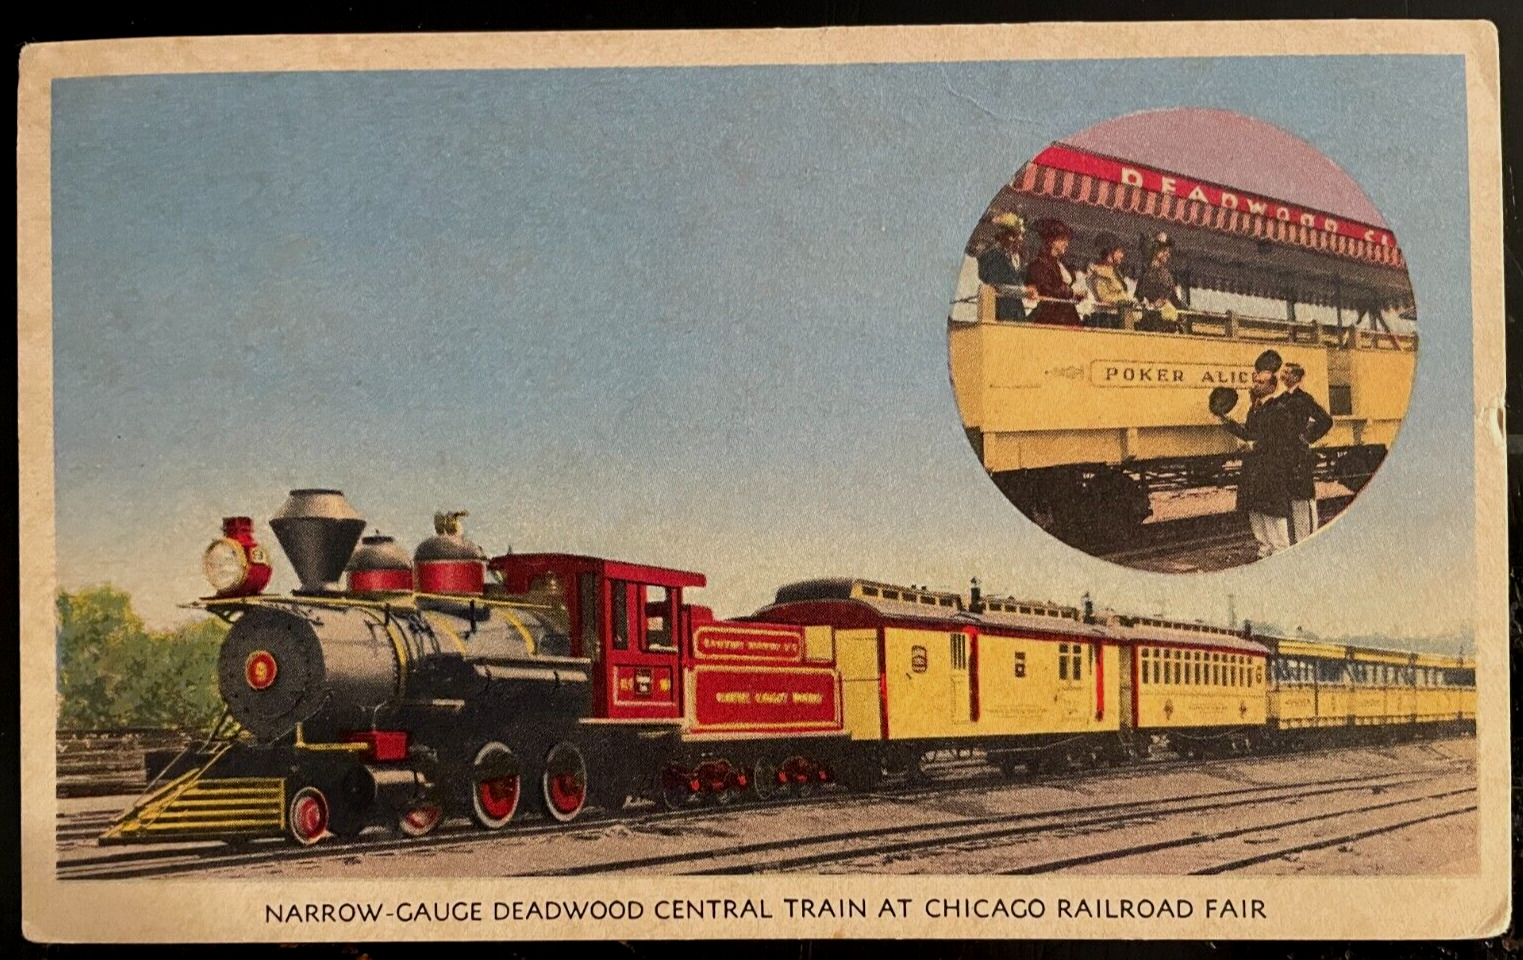 Vintage Postcard 1948 Deadwood Central Train, Railroad Fair, Chicago, Illinois